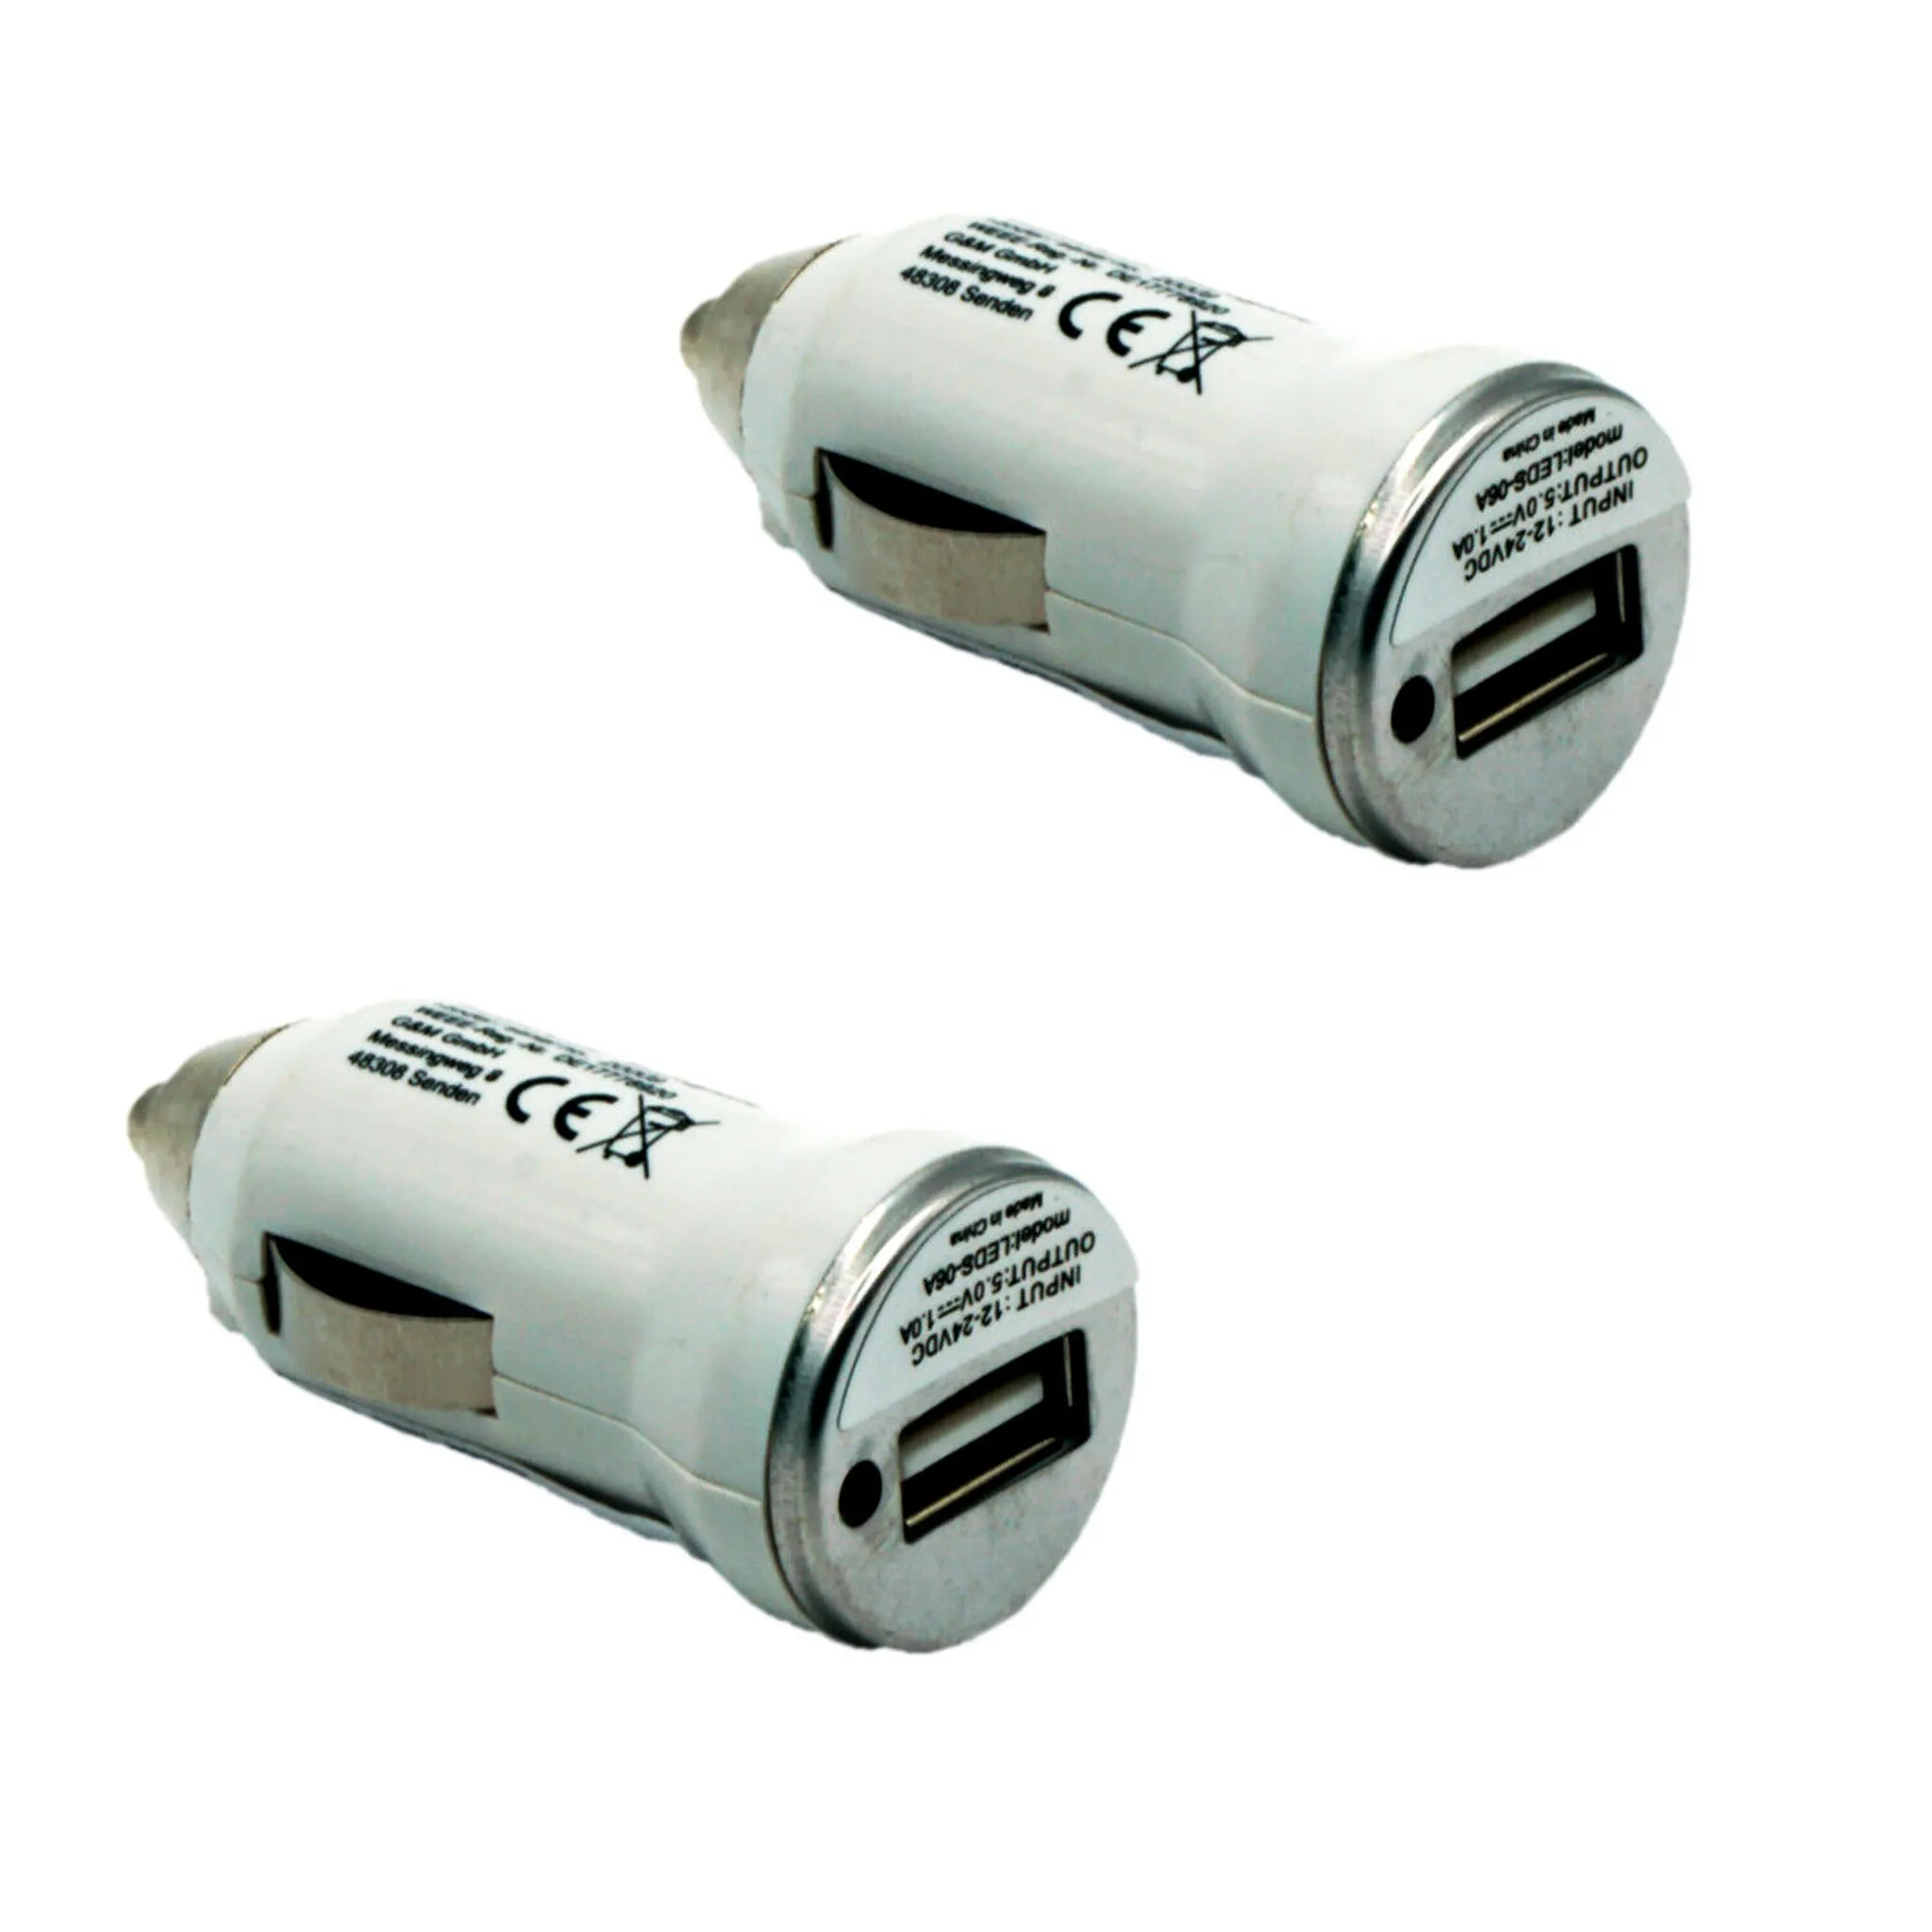 2x Zigarettenanzünder USB Ladegerät Auto KFZ Handy laden Adapter Mini  Stecker